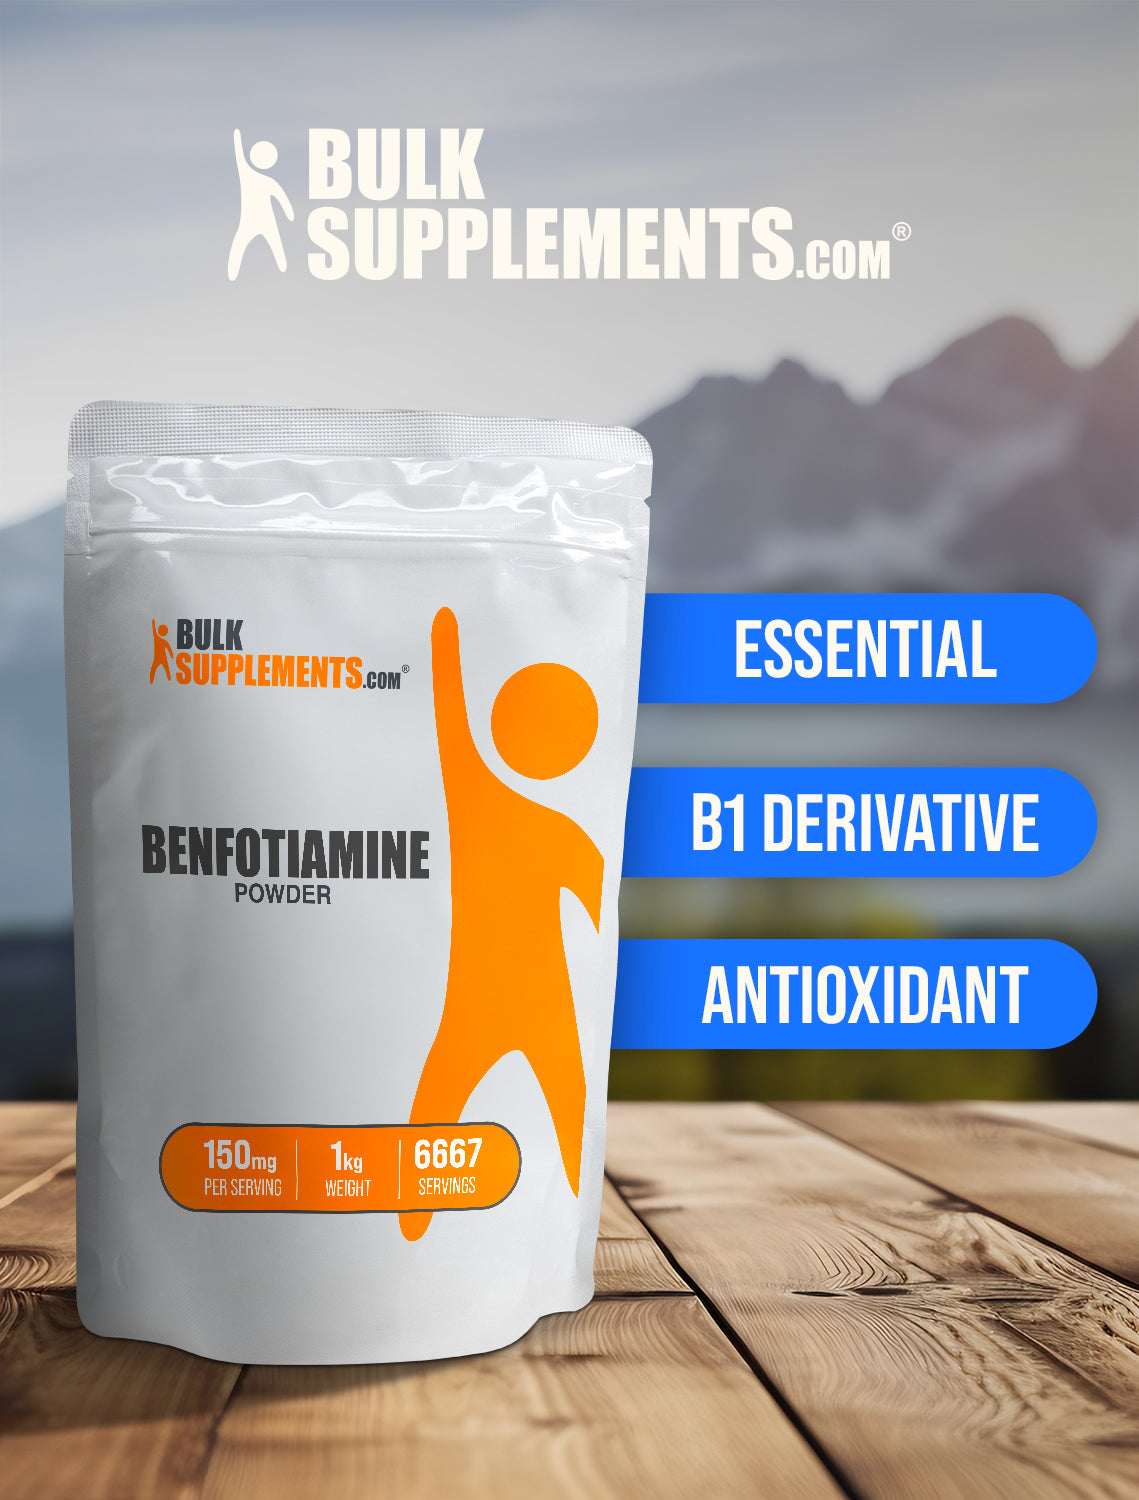 Benfotiamine powder label 1kg